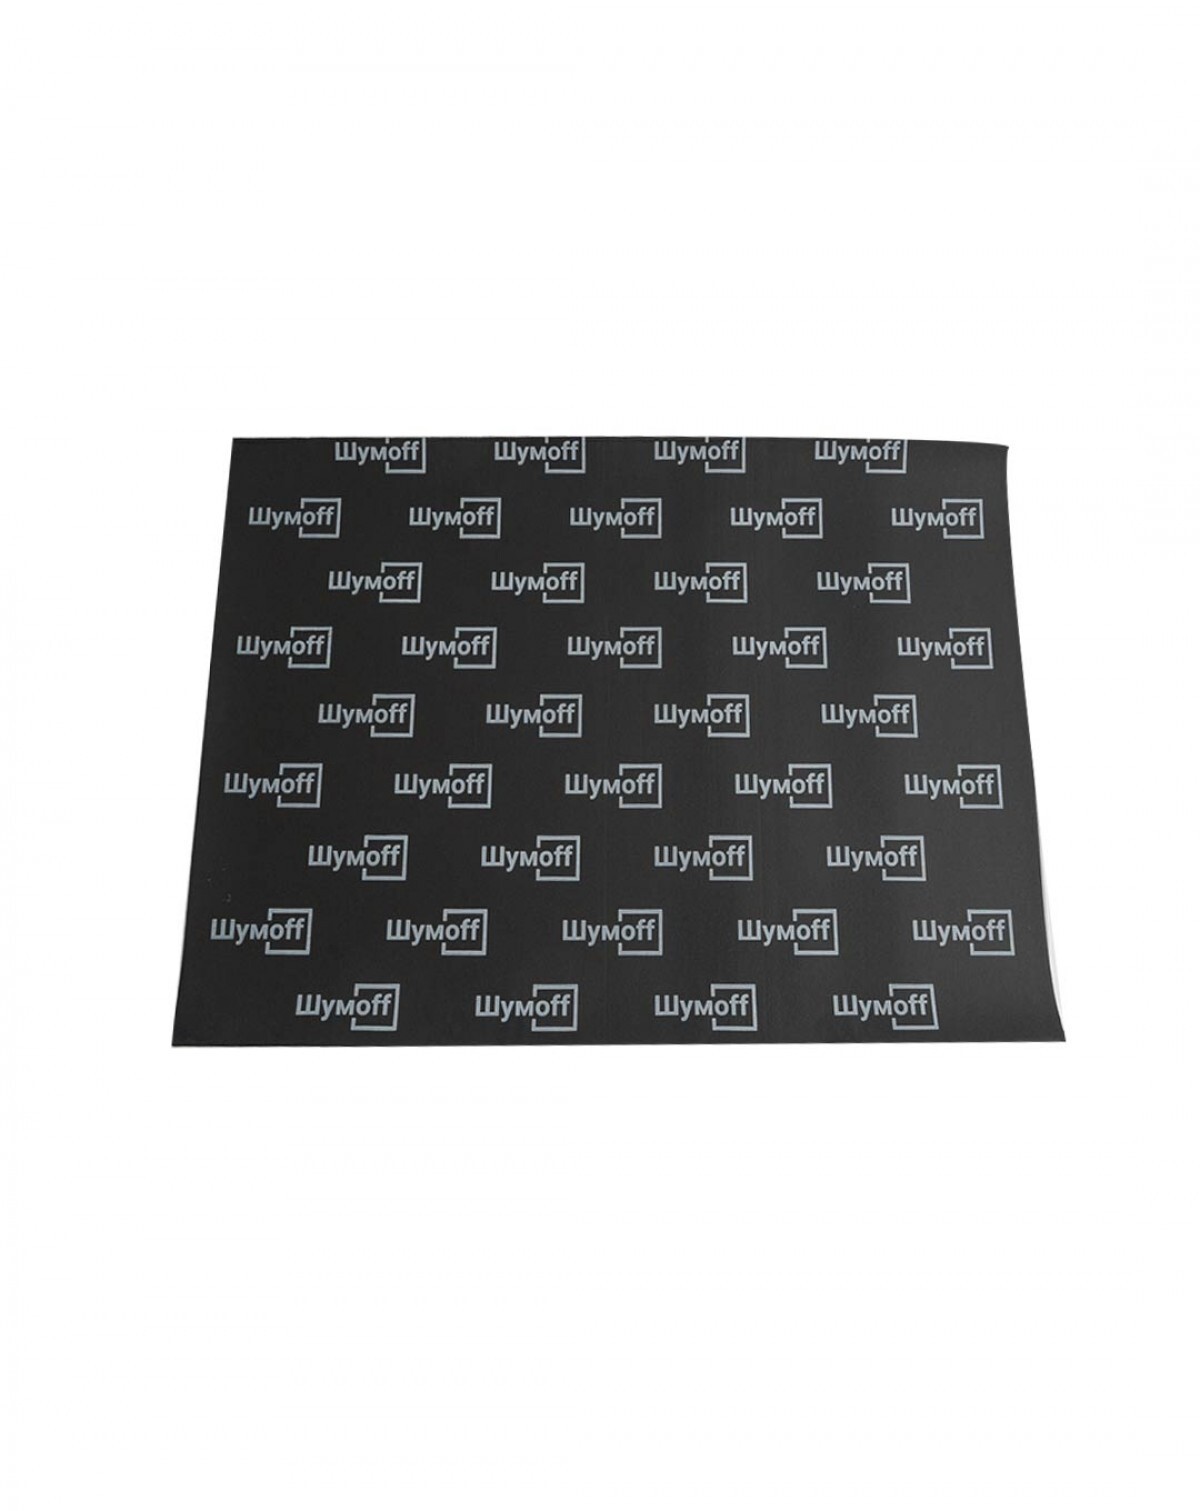 Шумопоглощающий материал для авто Шумофф Комфорт 6 (1 лист) 75х100 см черный